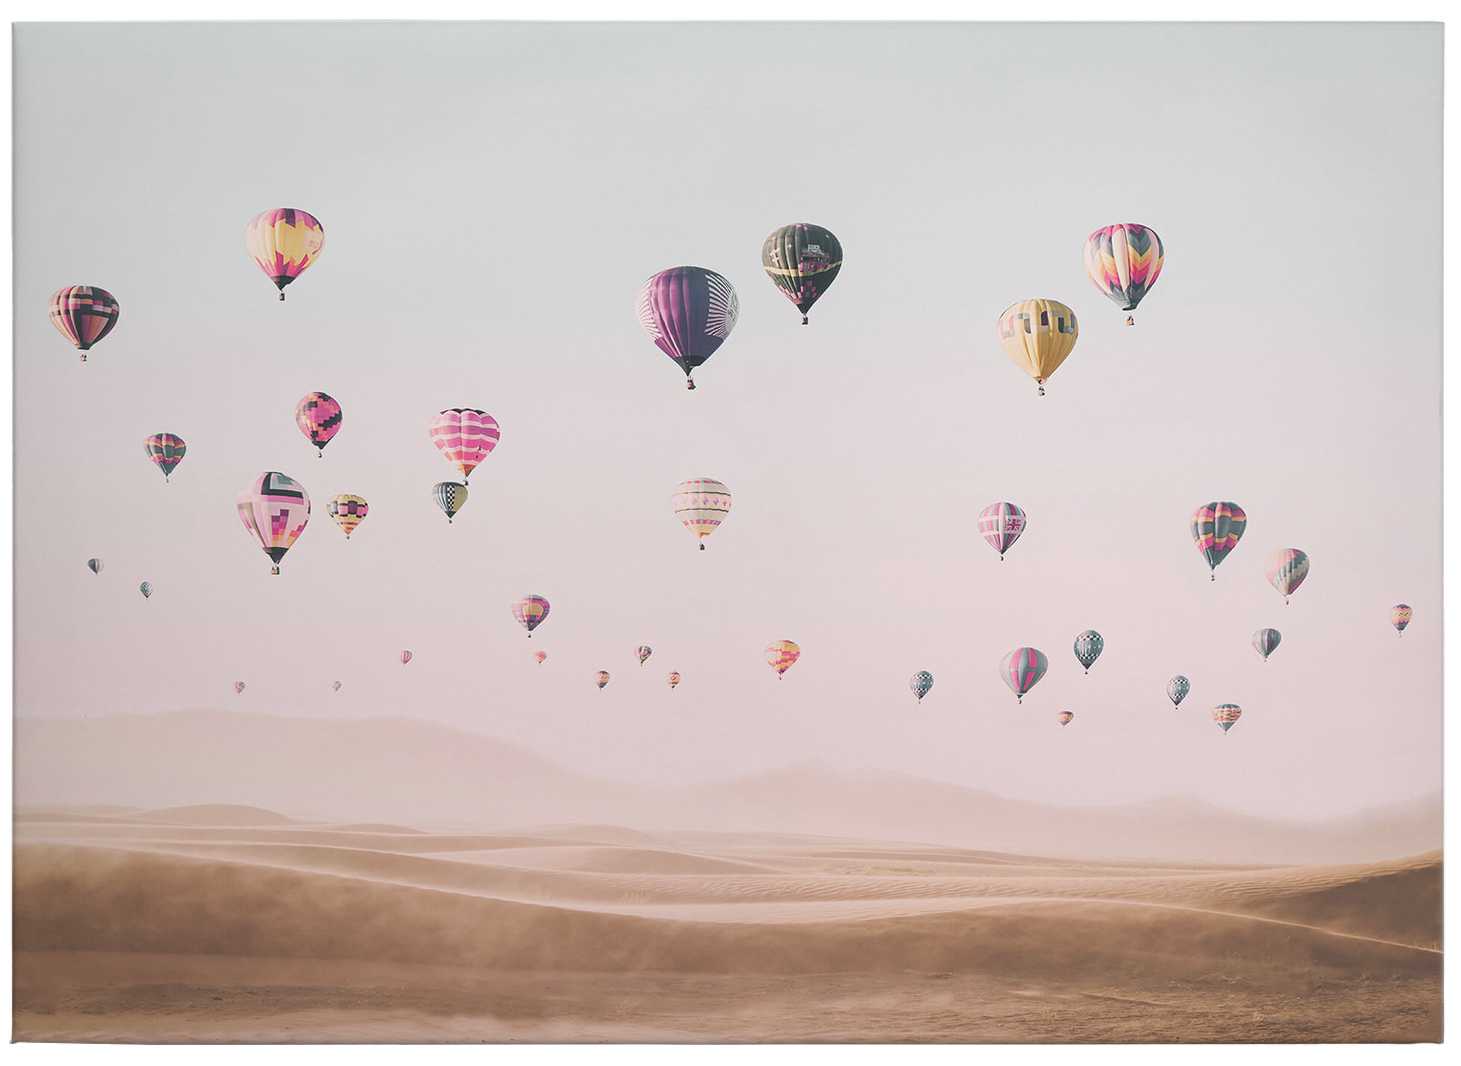             Quadro su tela Sky & Hot Air Balloon, Sisi & Seb - 0,70 m x 0,50 m
        